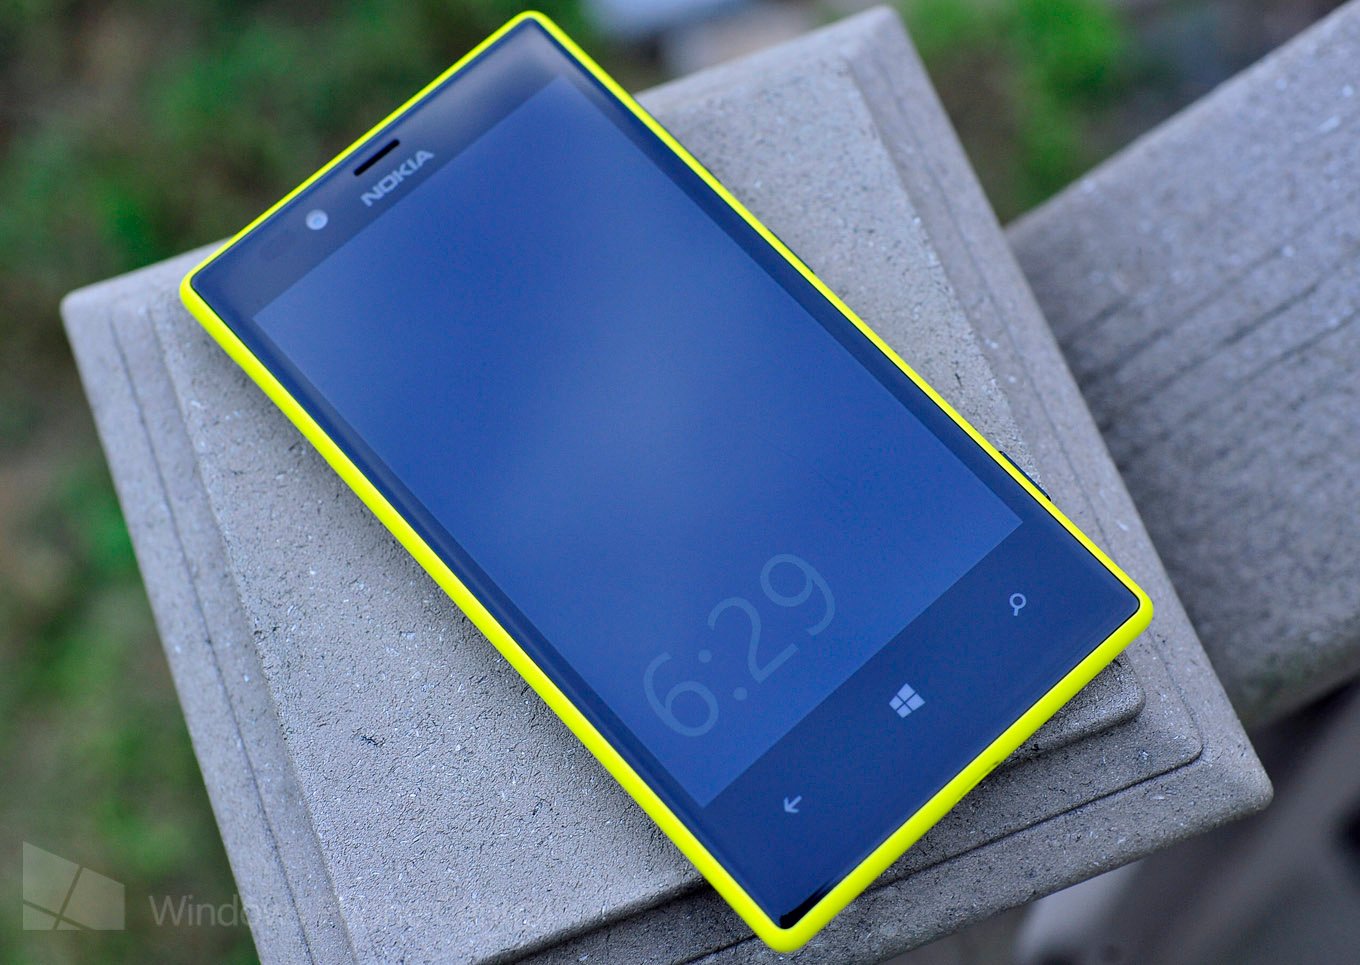 Nokia Lumia 720 + Amber and Glance Screen